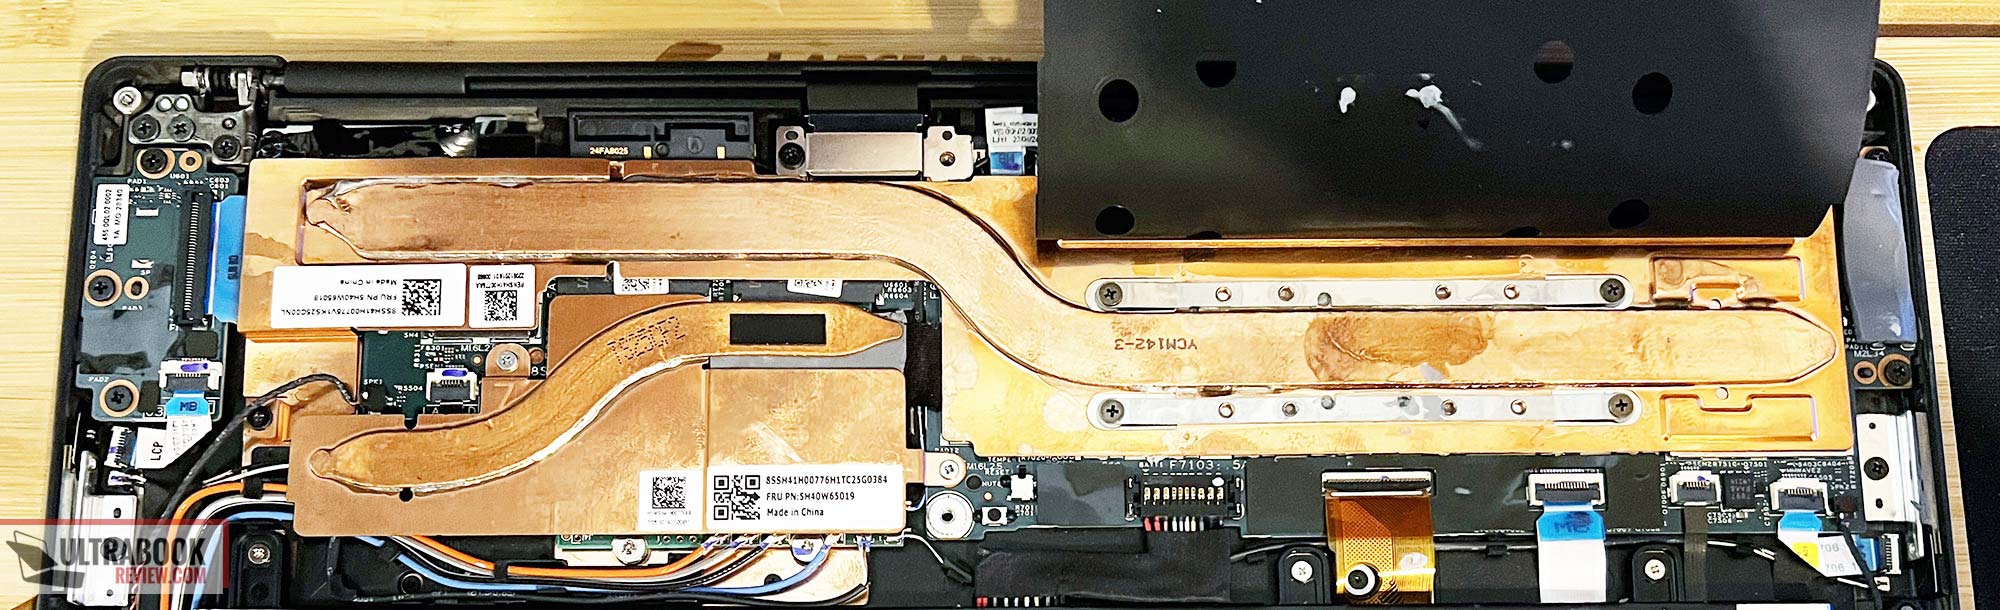 Lenovo ThinkPad X13s Review: Portable but sluggish - Reviewed